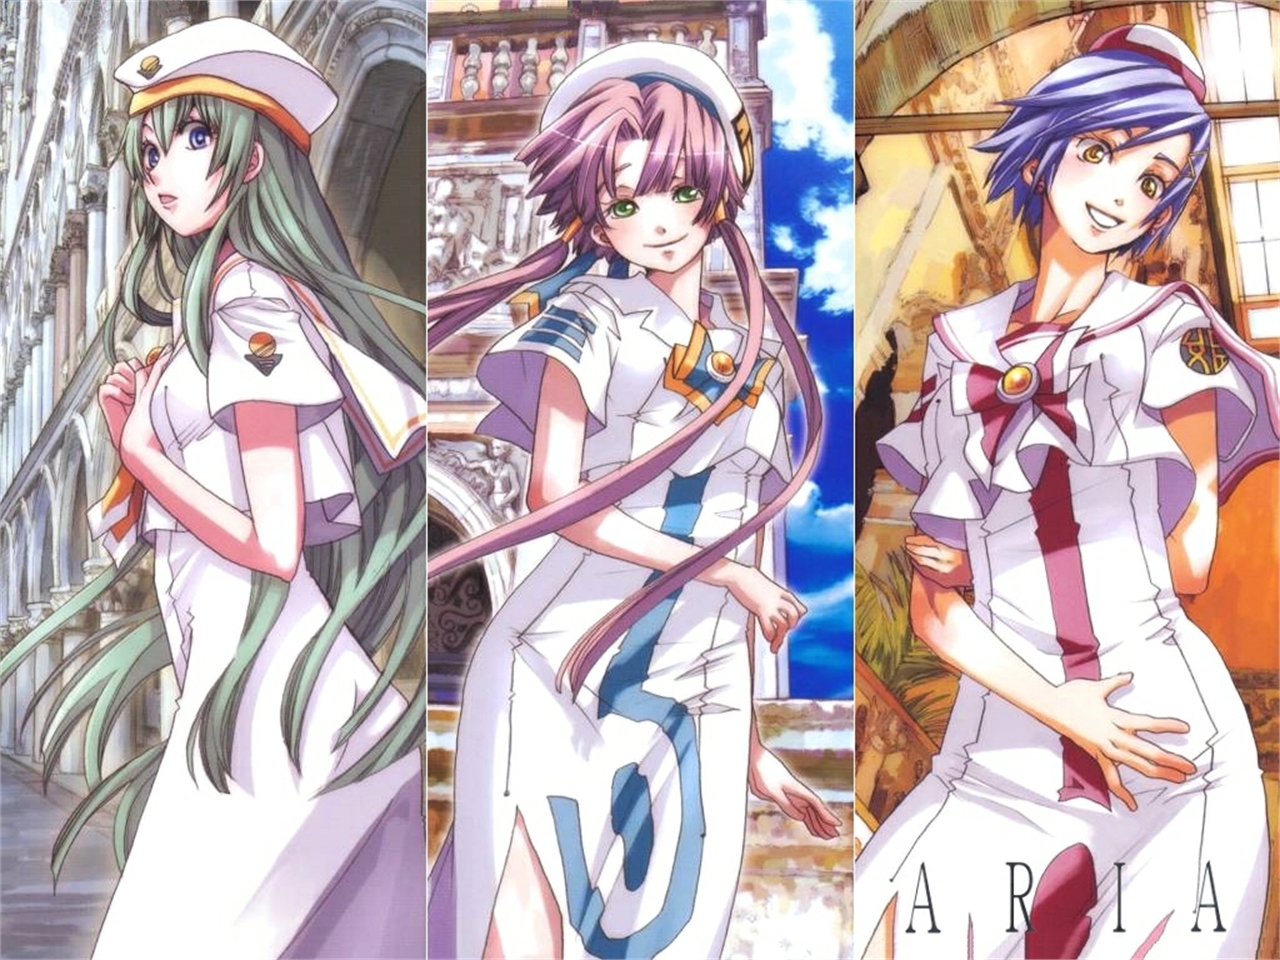 ARIA (Series) Image #205137 - Zerochan | Anime, Anime images, Animation